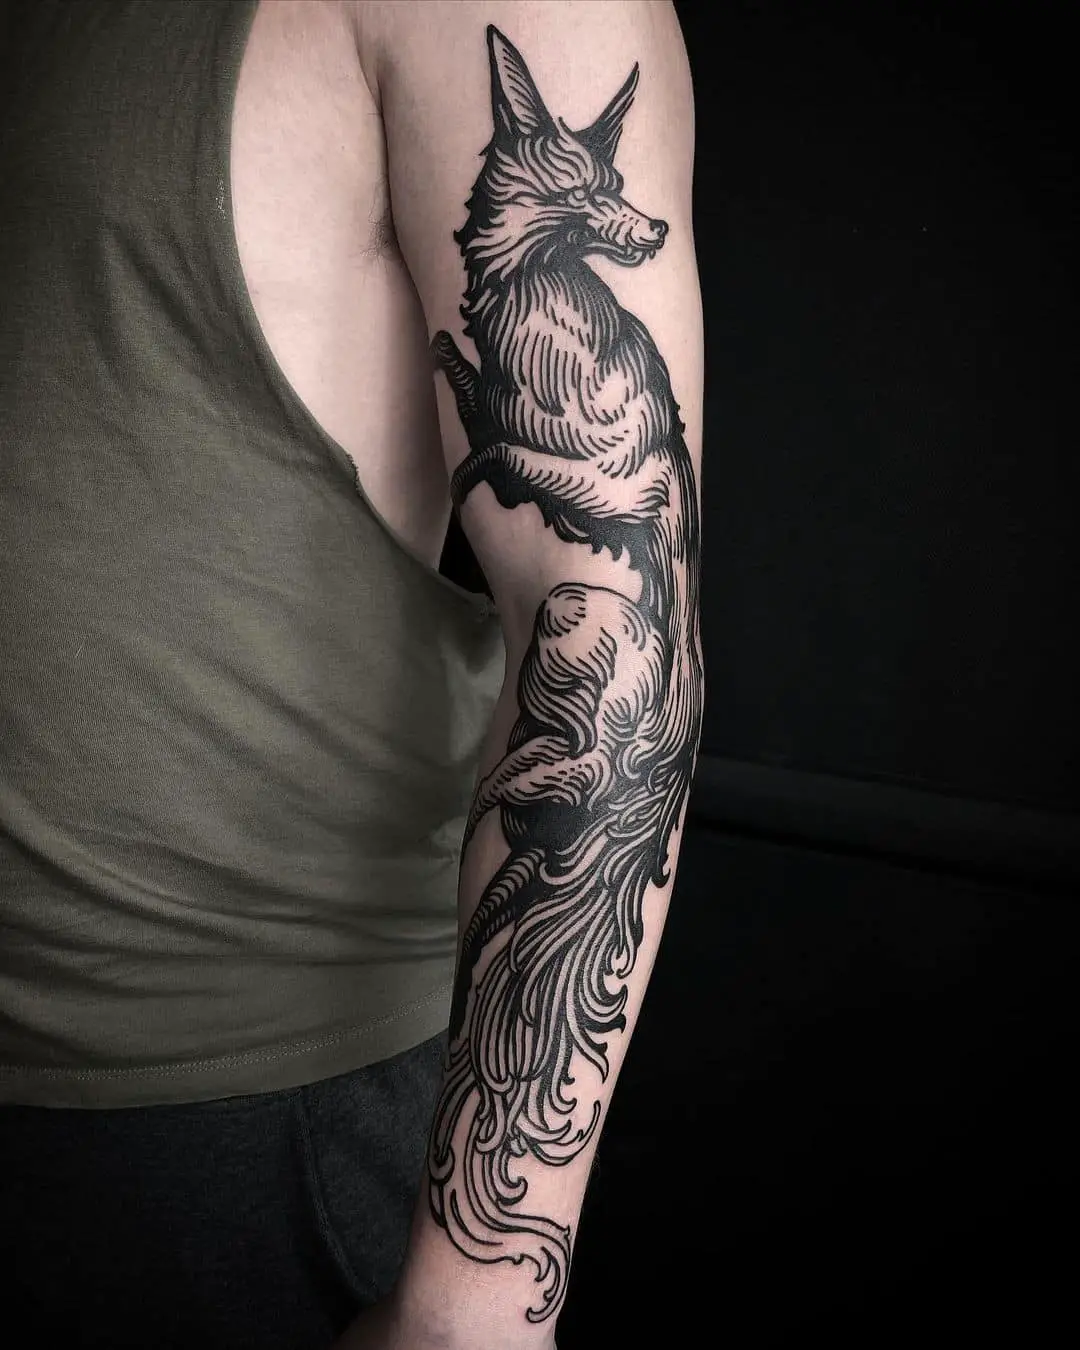 Fox tattoo for men on full arm by trindadetattoos